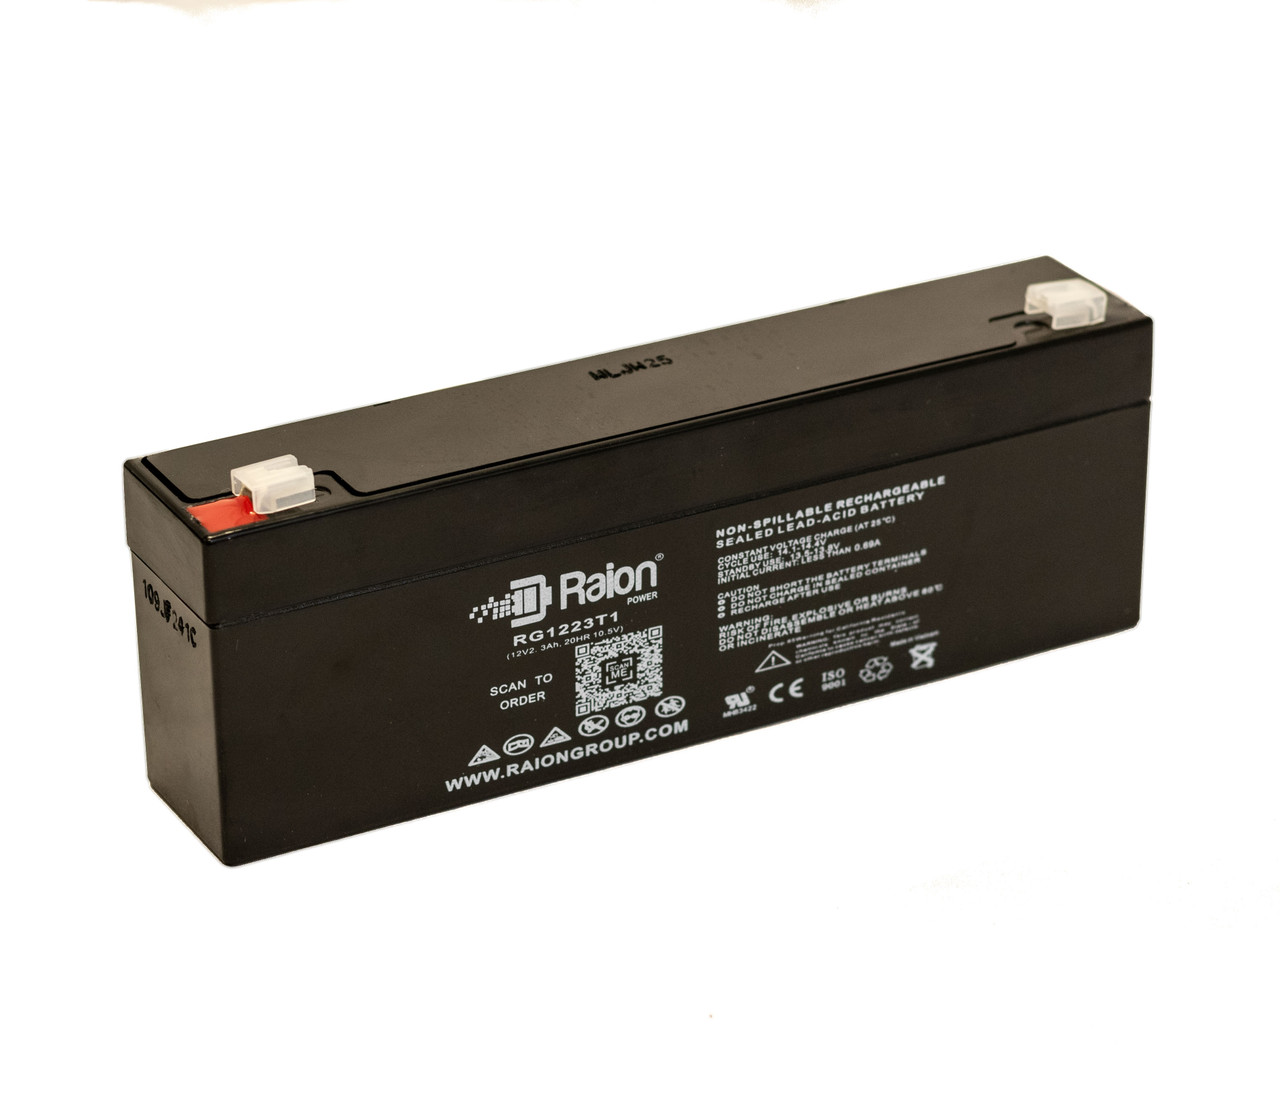 Raion Power RG1223T1 Replacement Battery for Viasys Healthcare Infant Flow SiPap